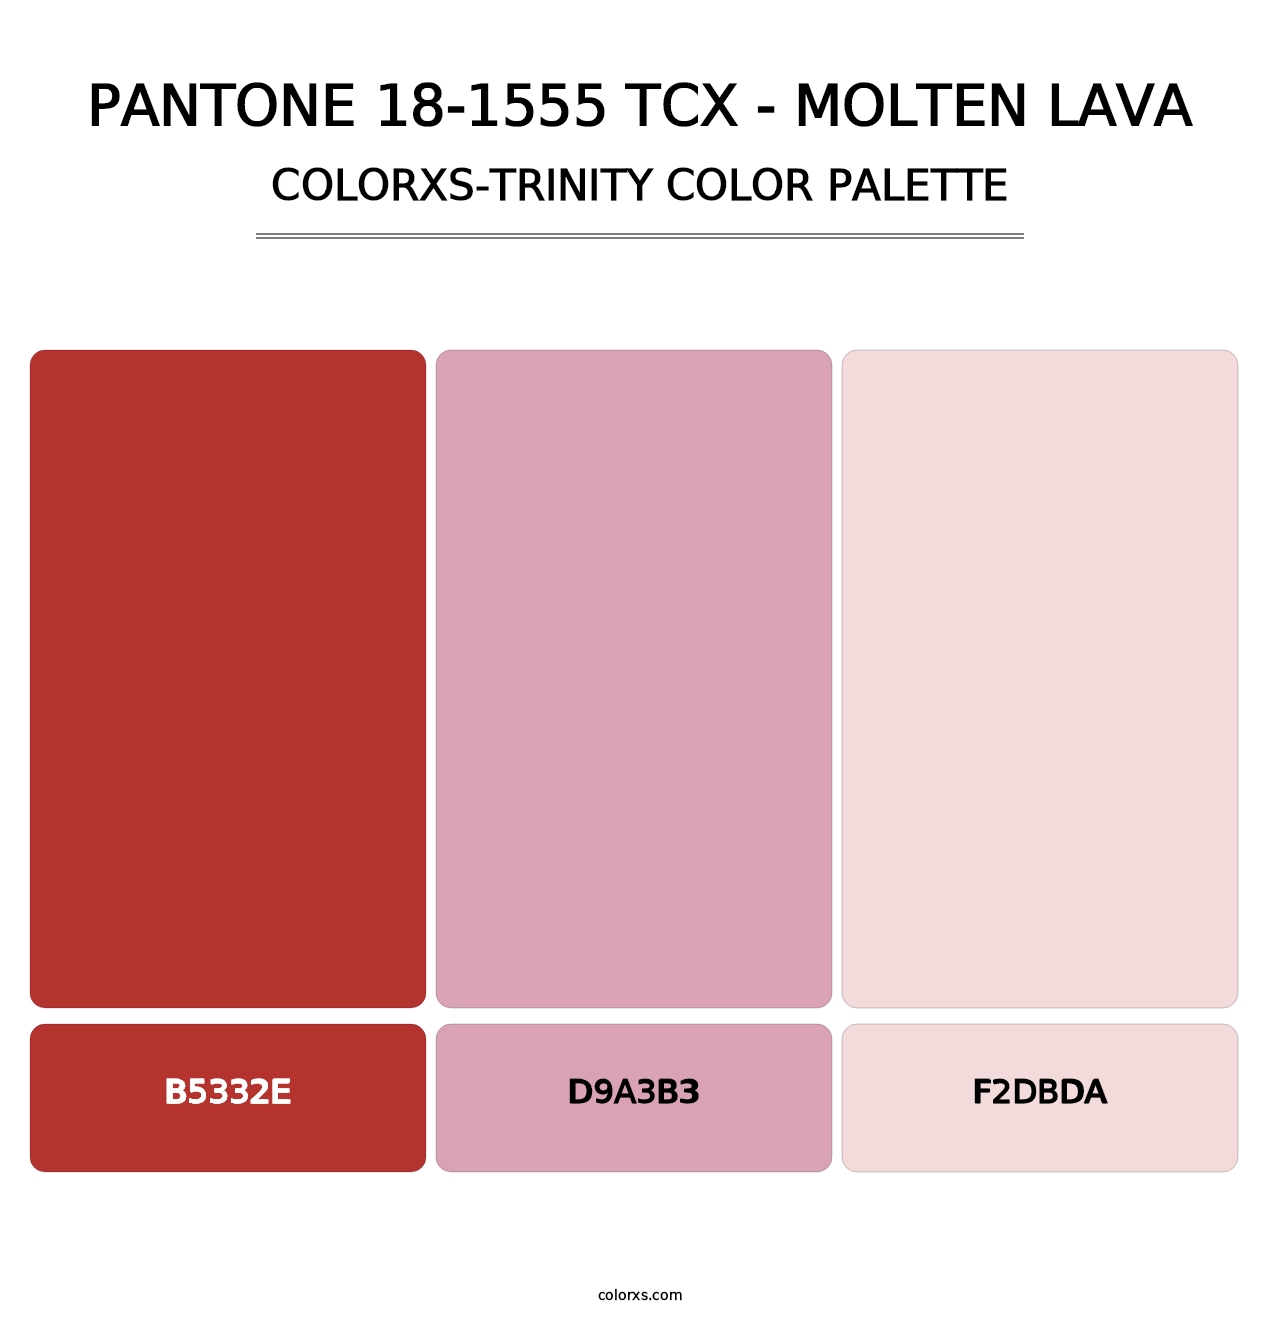 PANTONE 18-1555 TCX - Molten Lava - Colorxs Trinity Palette